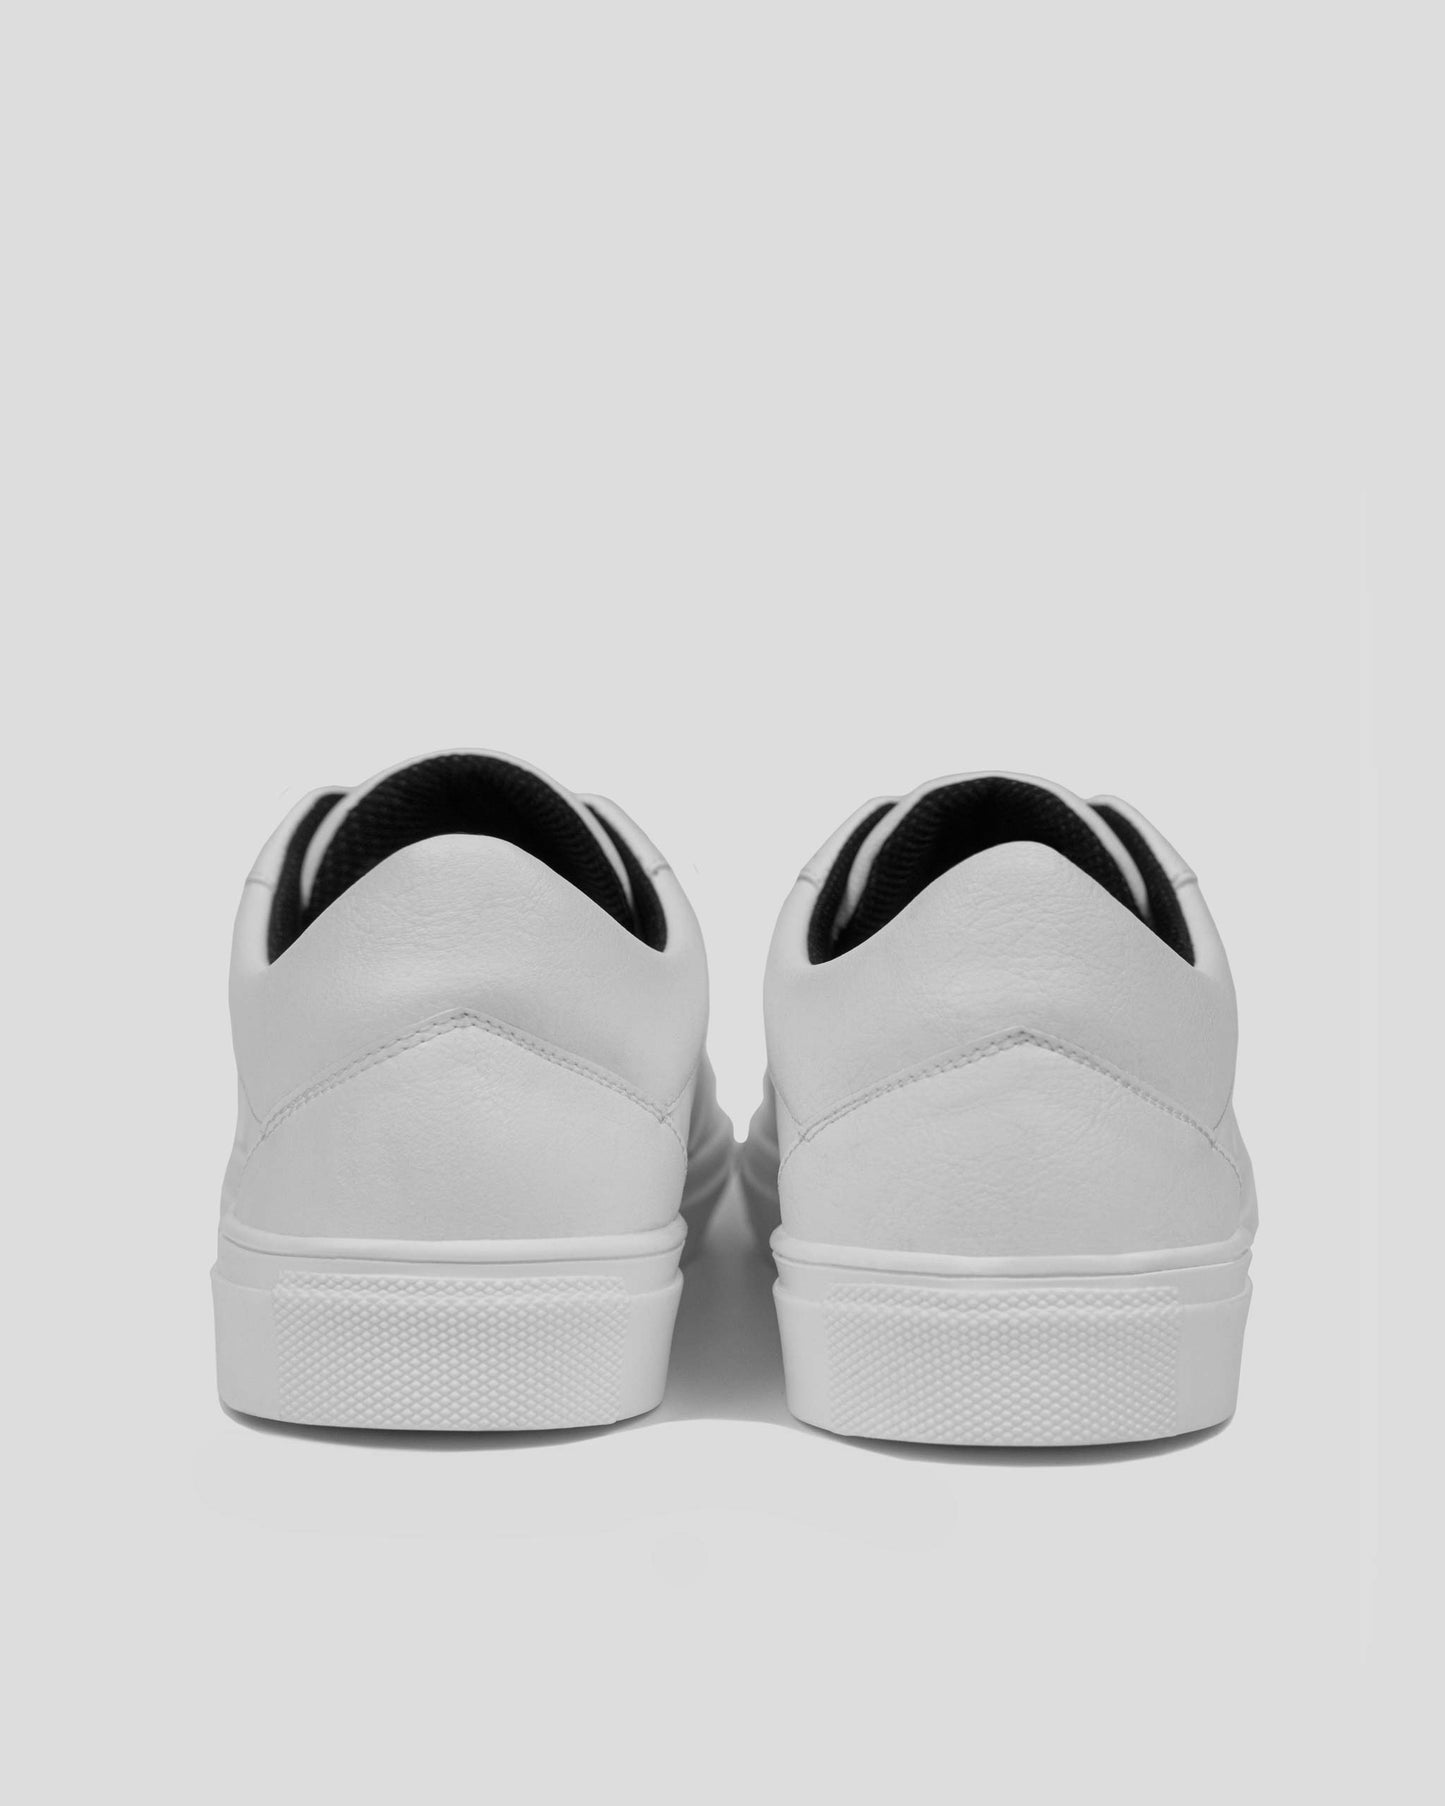 Sneakers Awake White sneakers made of Vegea grape leather